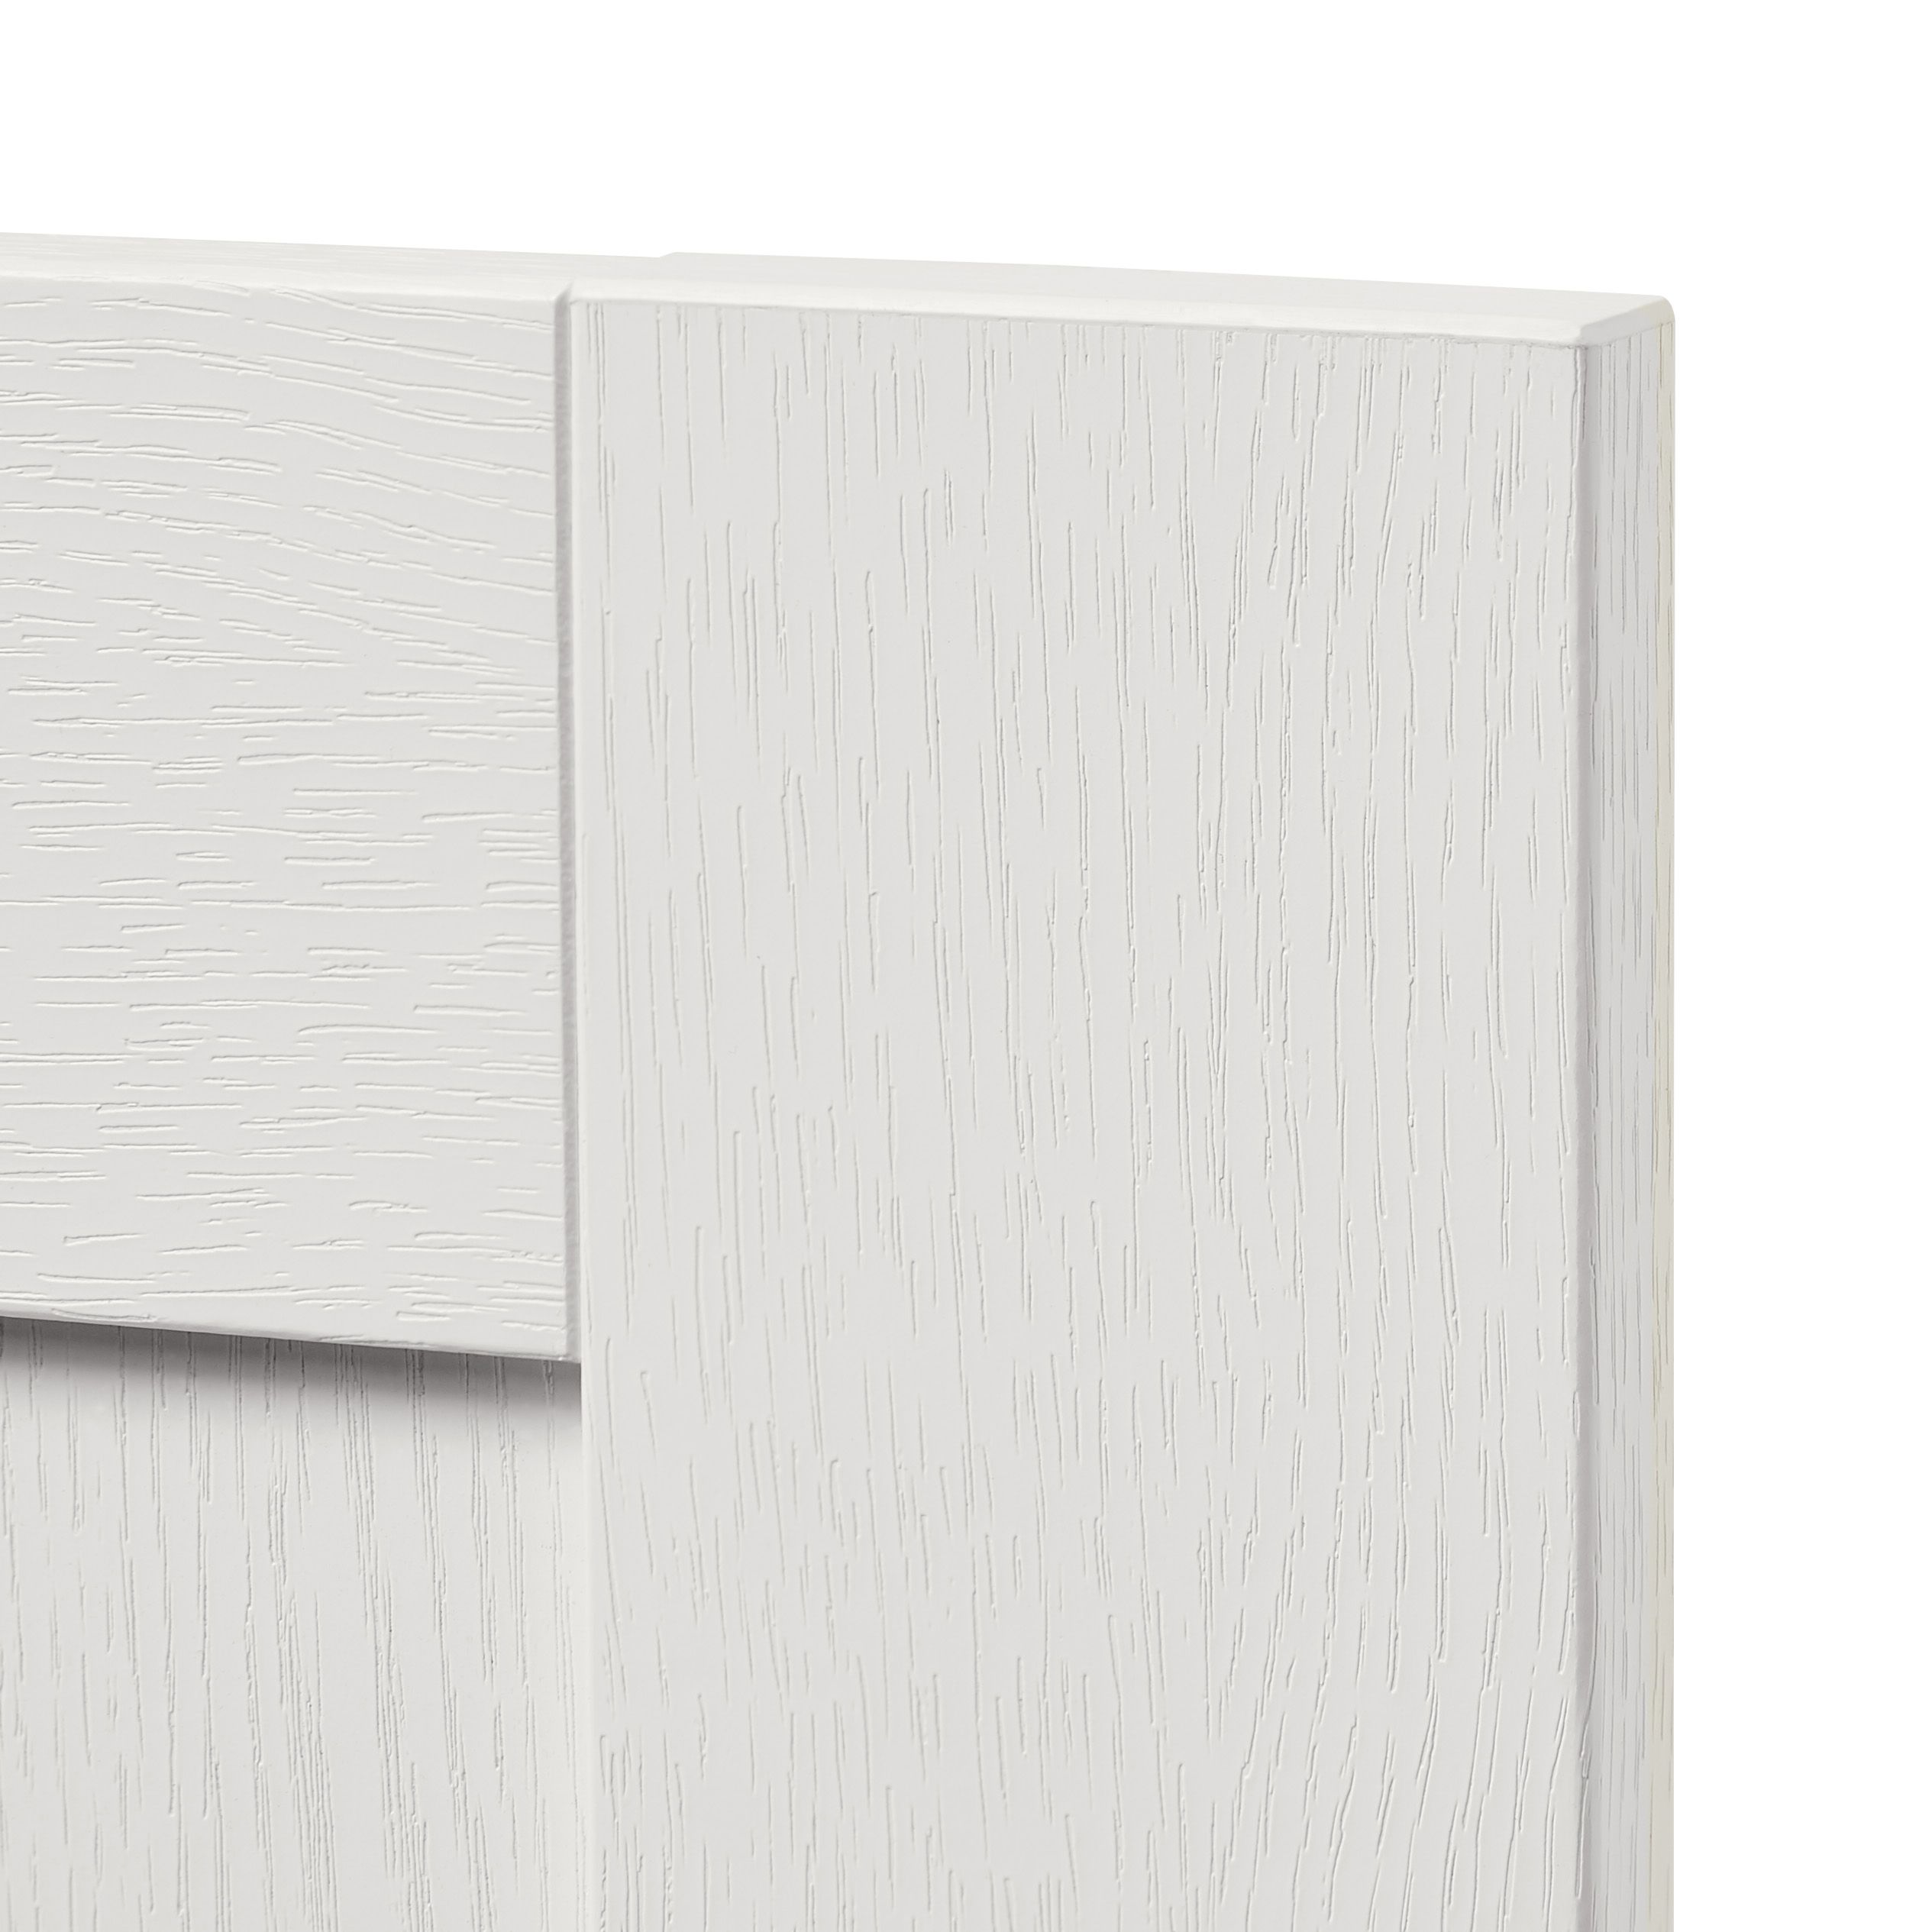 GoodHome Alpinia Matt ivory painted wood effect shaker Tall appliance Cabinet door (W)600mm (H)633mm (T)18mm